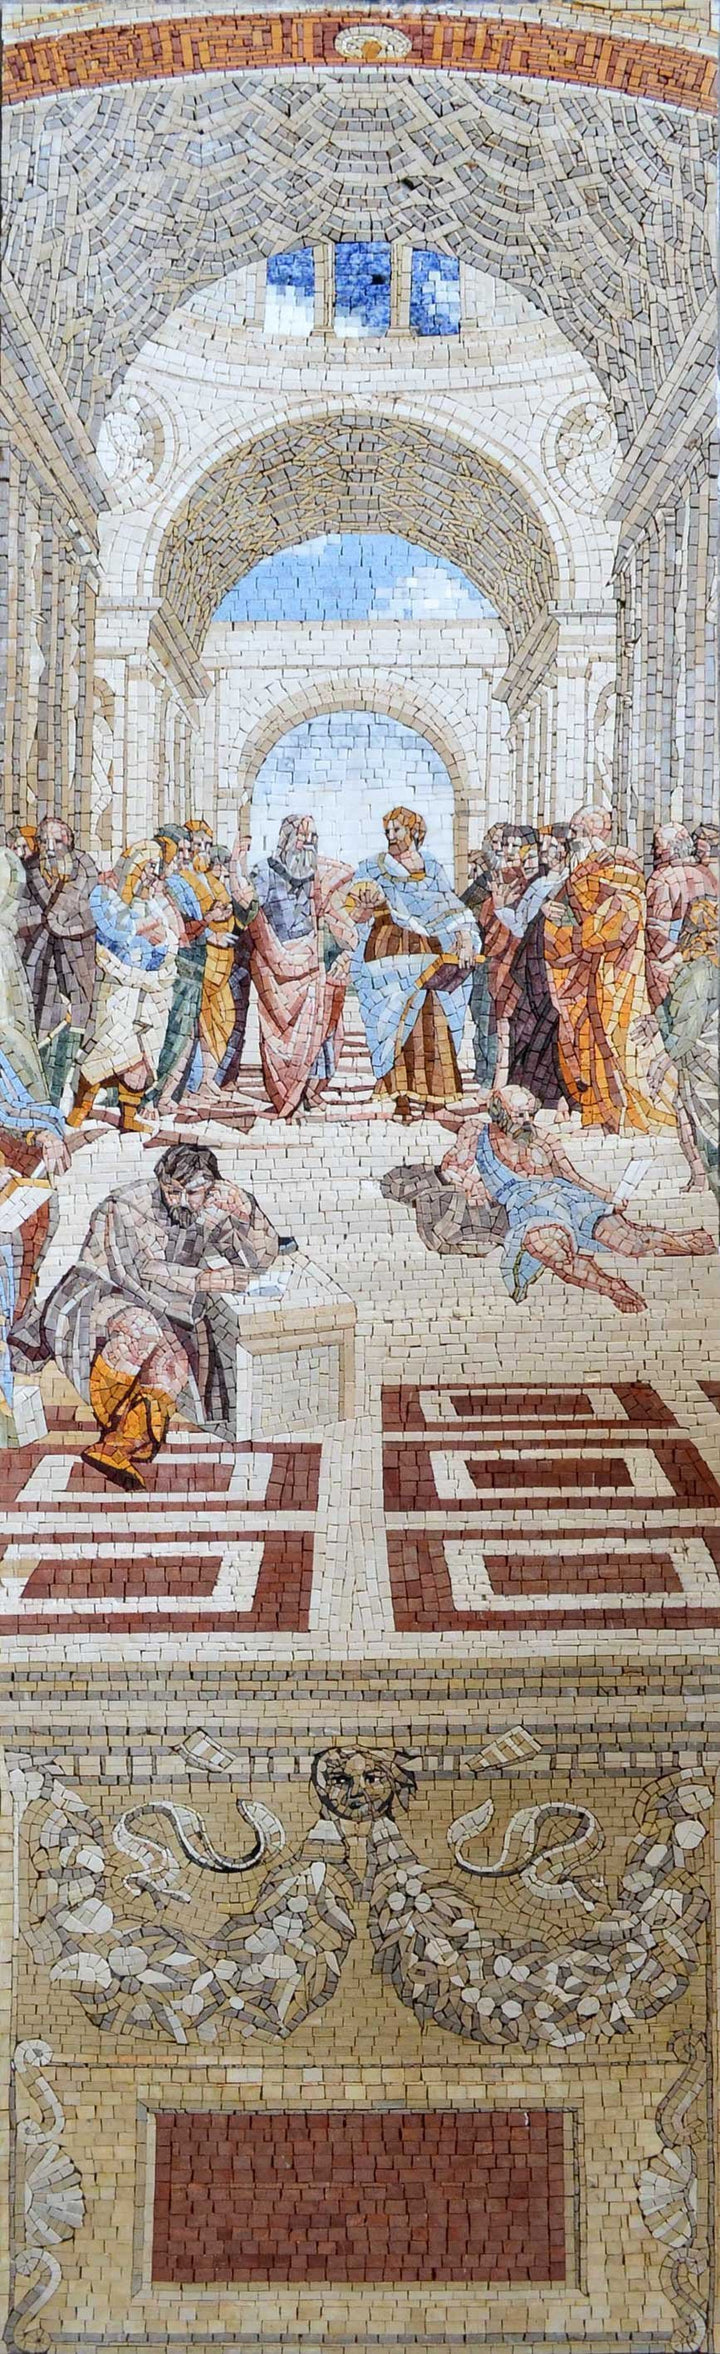 Rafael School Of Athens" - Mosaic Reproduction "